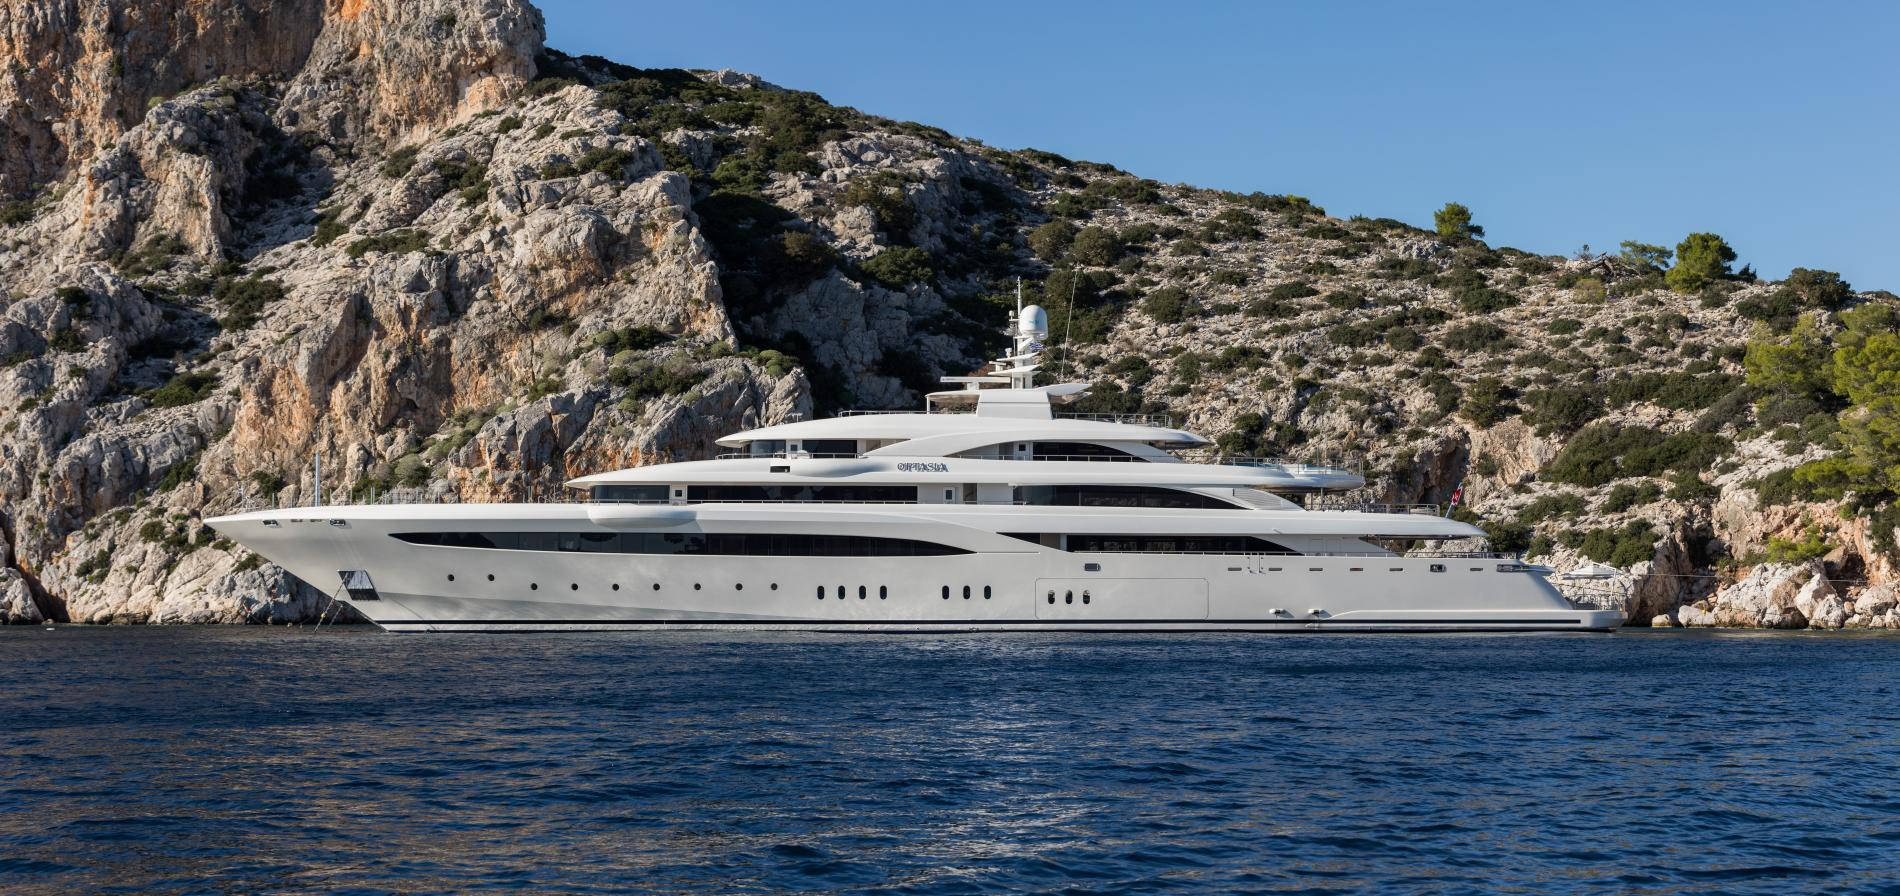 Atalanta Golden Yachts AE “O'ptasia”